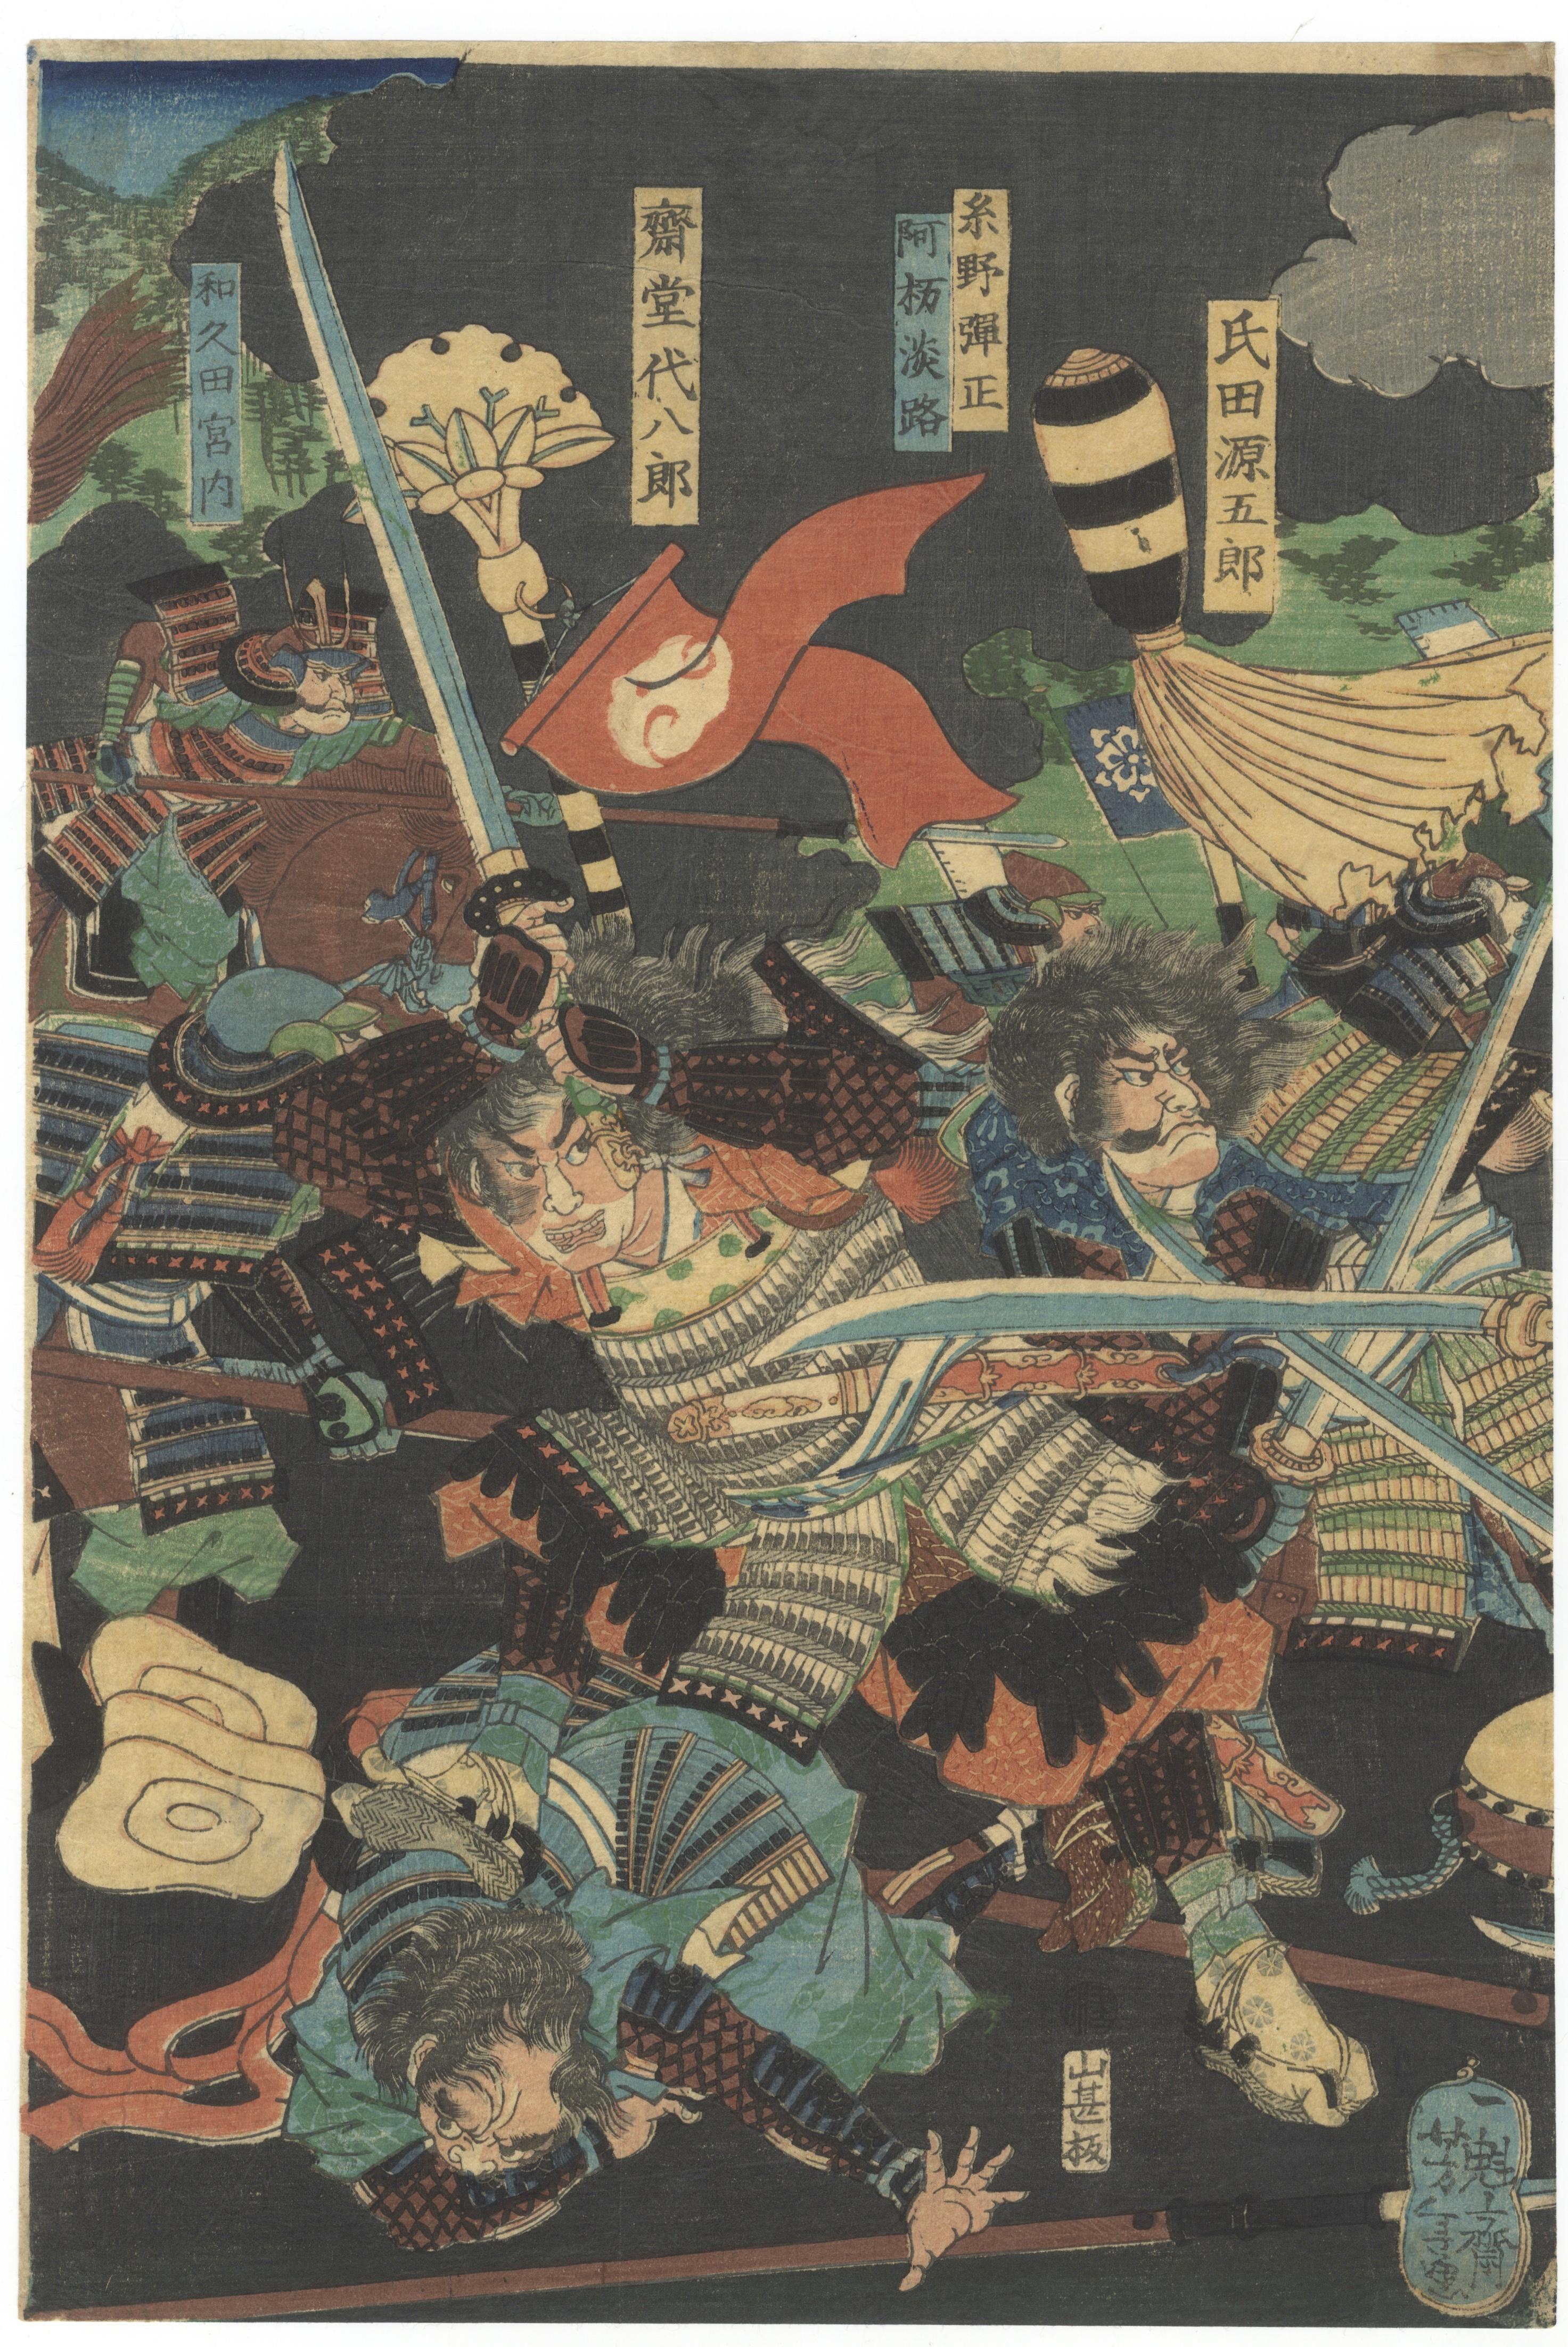 Artist: Yoshitoshi Tsukioka (1839-1892)
Title: The Great Battle of Yamazaki
Publisher: Yamashiroya Jinbei
Date: 1865
Dimensions: (L) 24.5 x 36.3 (C) 24.7 x 36 (R) 24.5 x 36.2 cm
Condition: Restored top right corner of right panel. Some restored